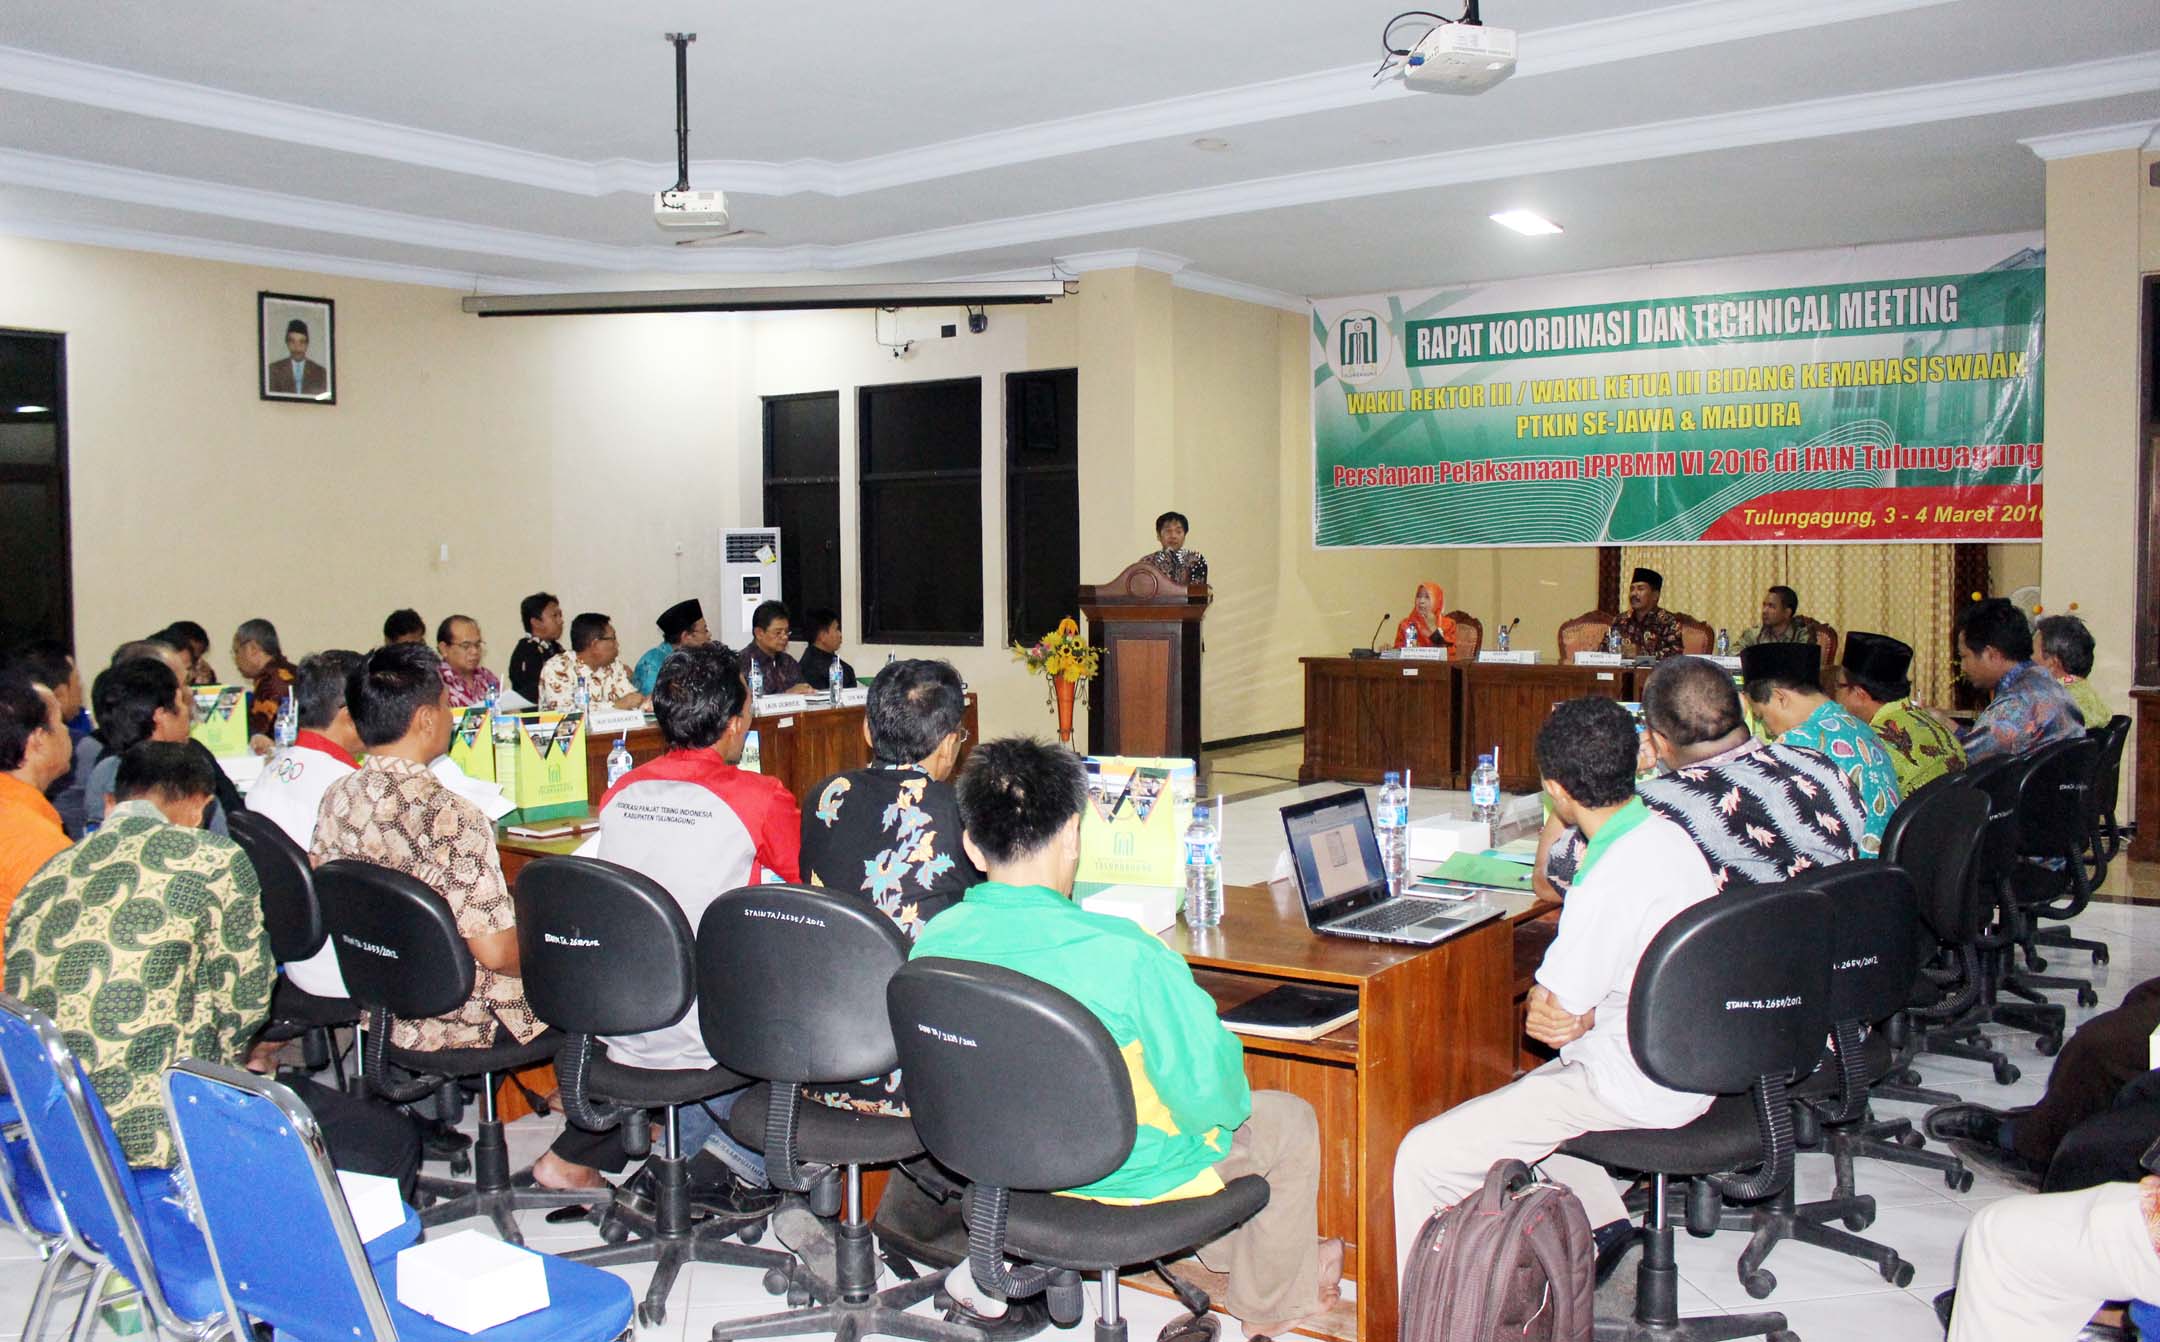 Rapat Koordinasi Invitasi Pekan Pengembangan Bakat dan Minat (IPPBMM) VI PTKIN se-Jawa-Madura di IAIN Tulungagung